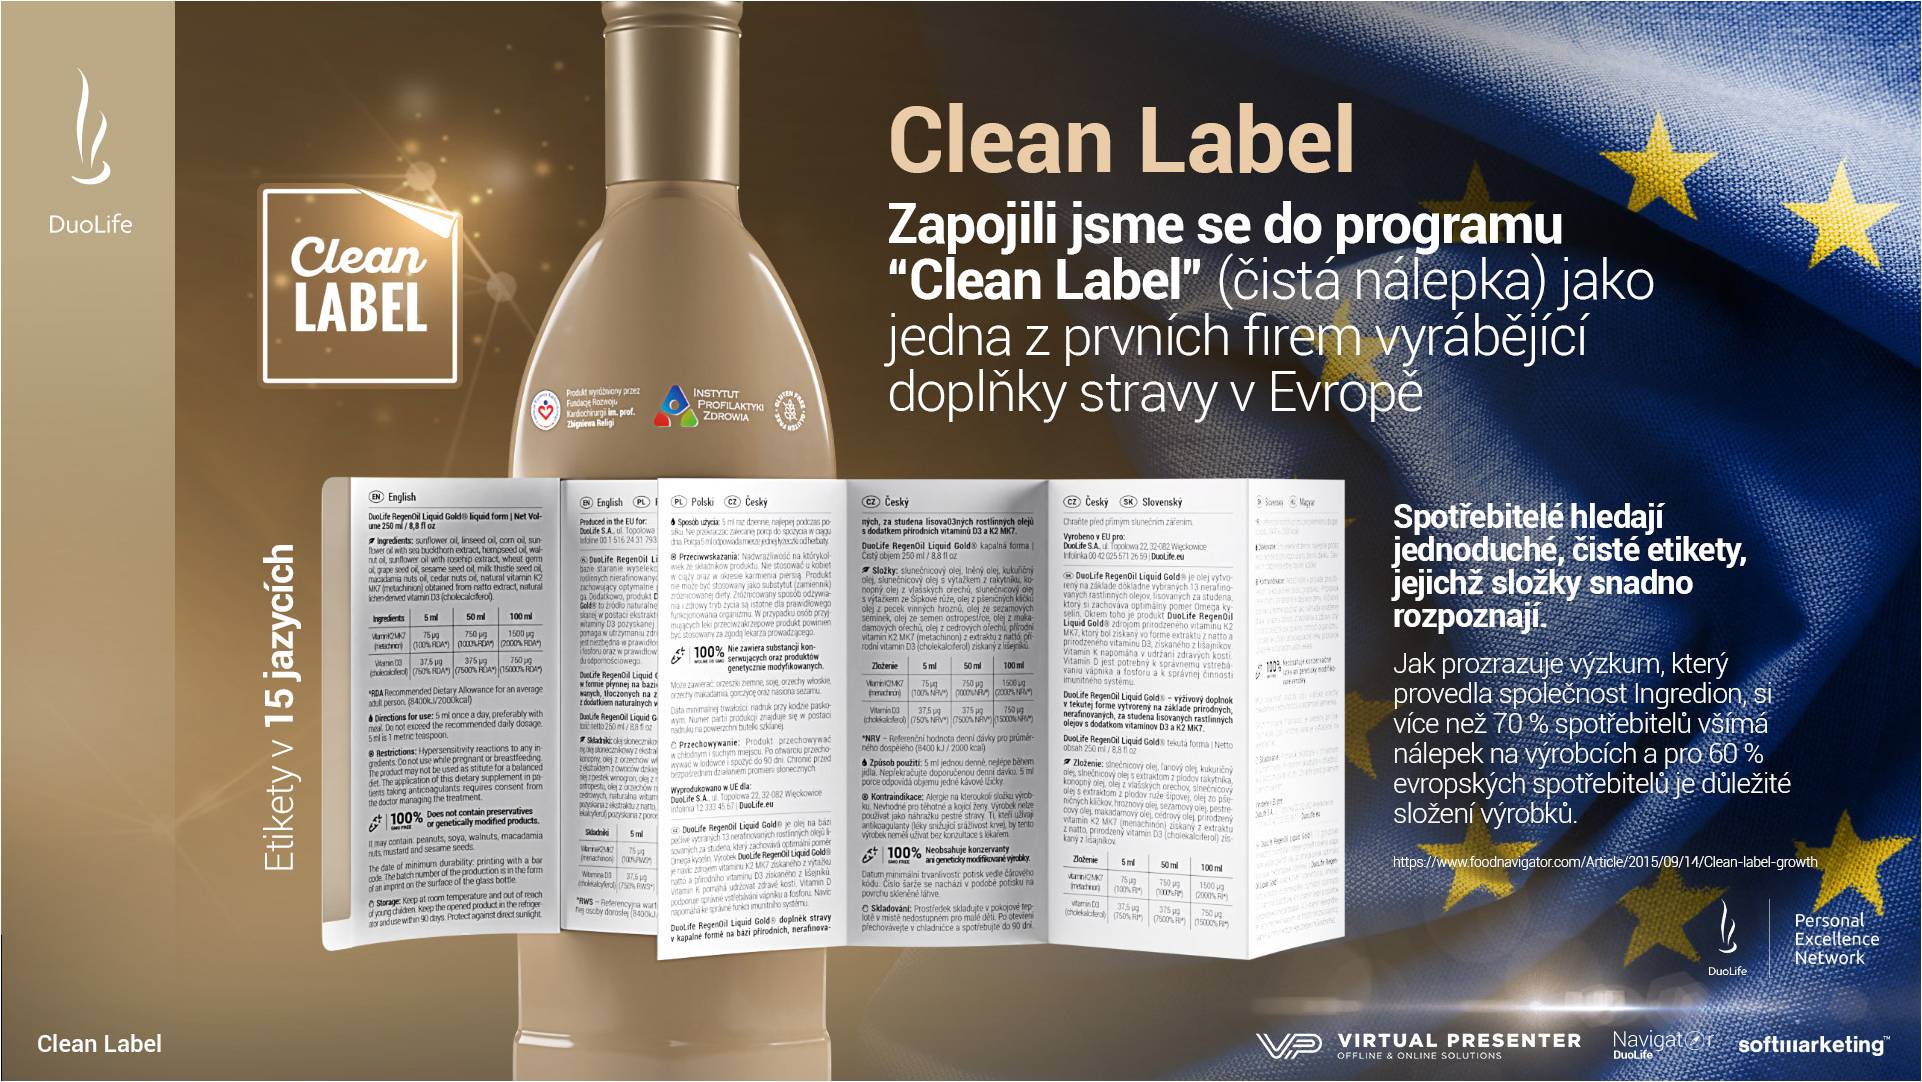 DuoLife Clean Label